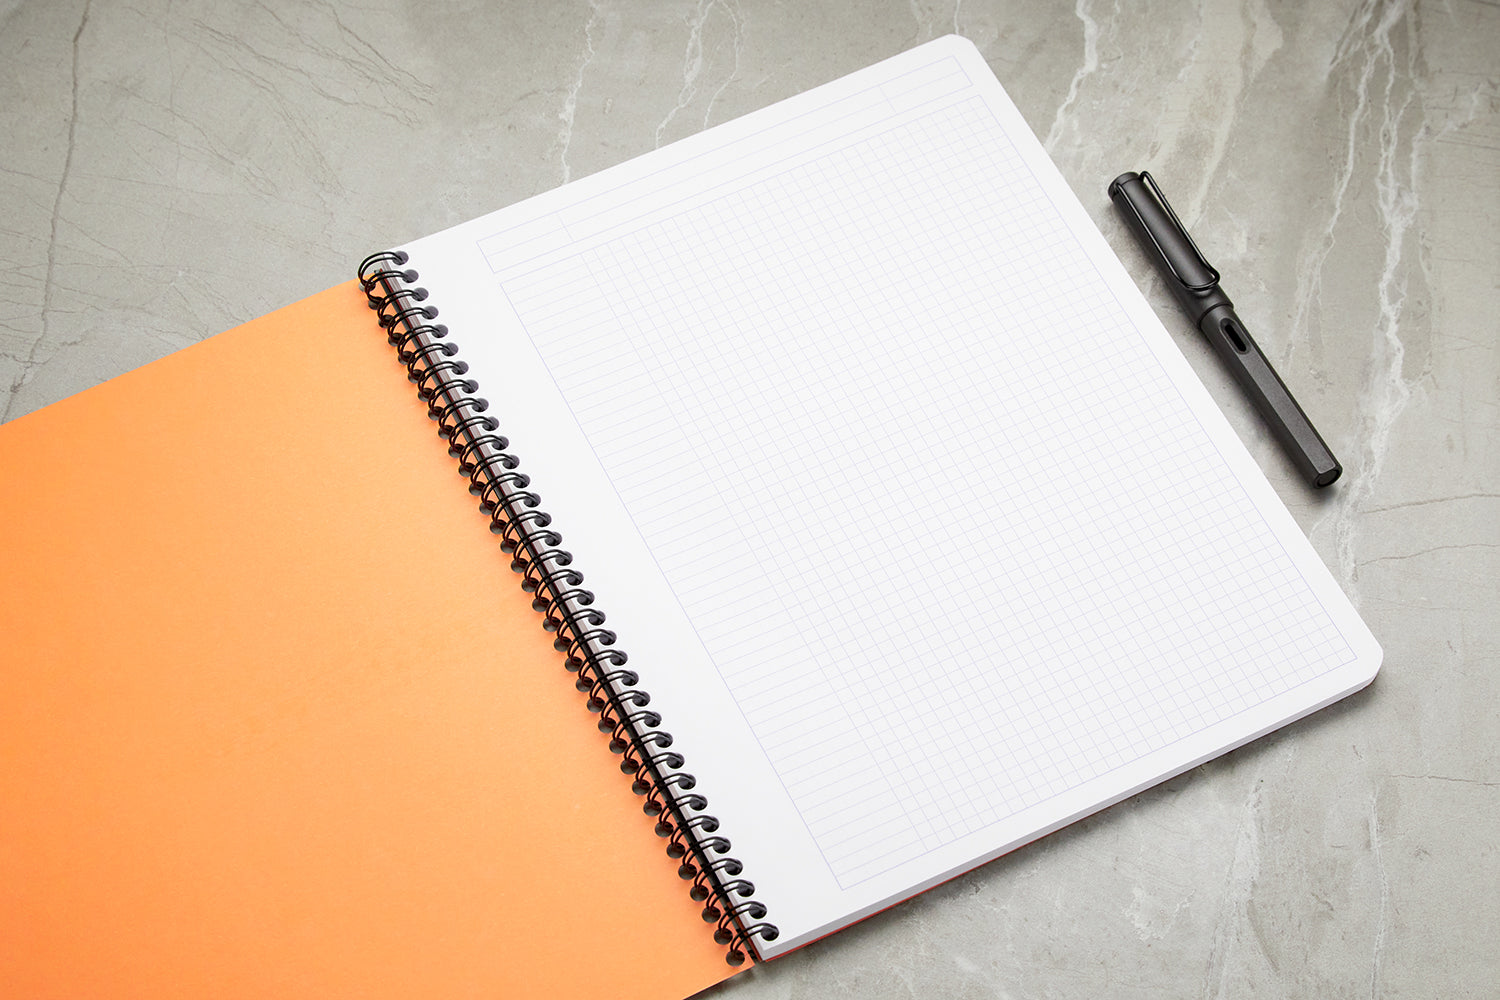 Rhodia Notebooks  Shop Notebooks & Paper - The Goulet Pen Company